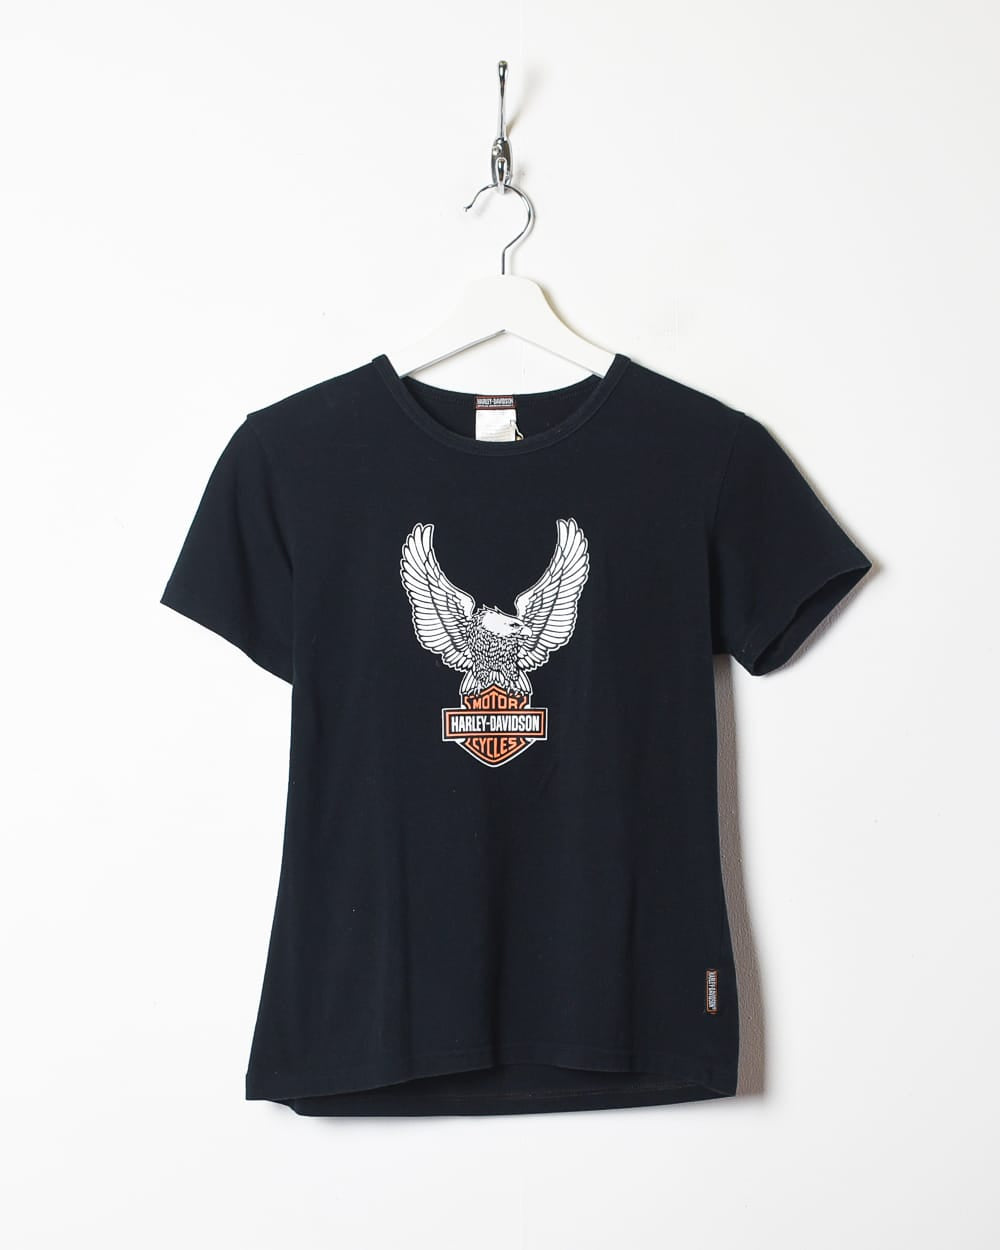 Black Harley Davidson Eagle Graphic T-Shirt - Small Woman's